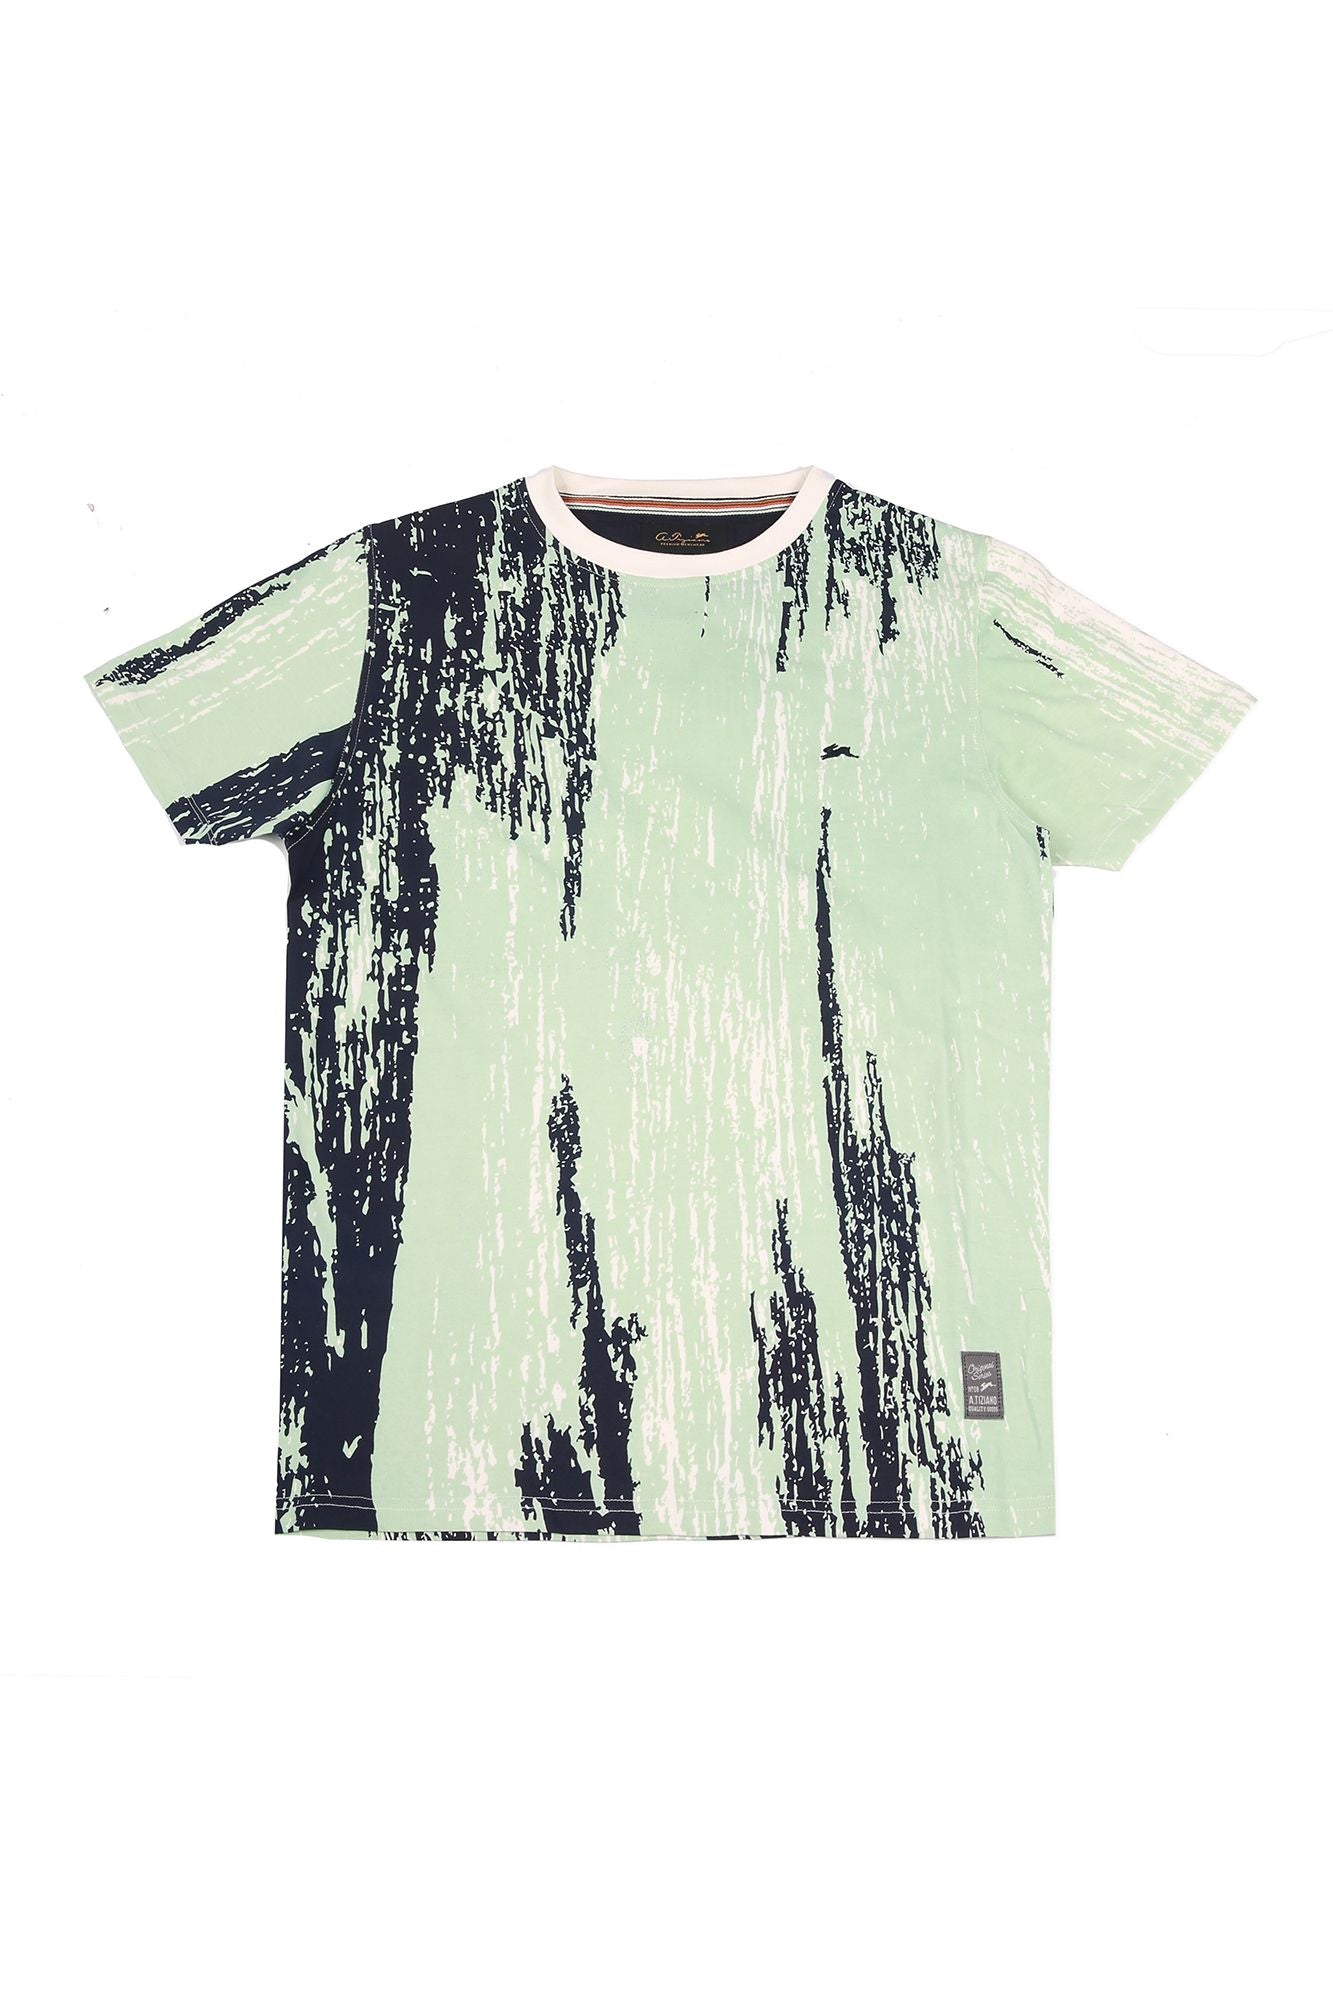 Baxter | Men's Crew Neck Graphic T-Shirt – A.Tiziano